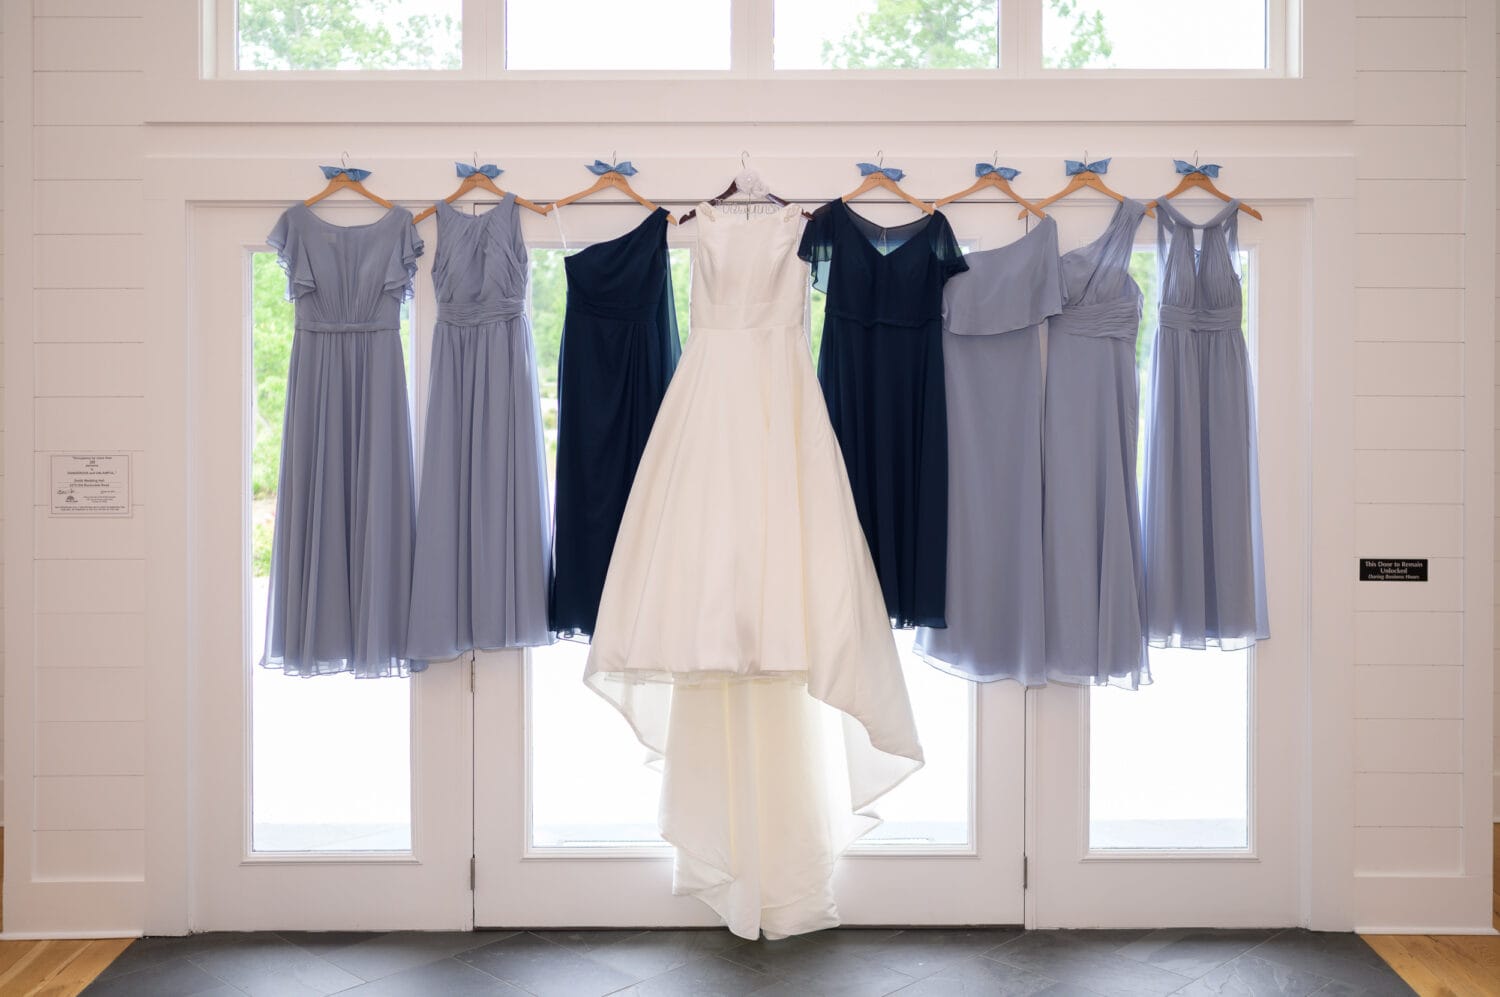 Dresses hanging in the windowlight  - The Venue at White Oaks Farm